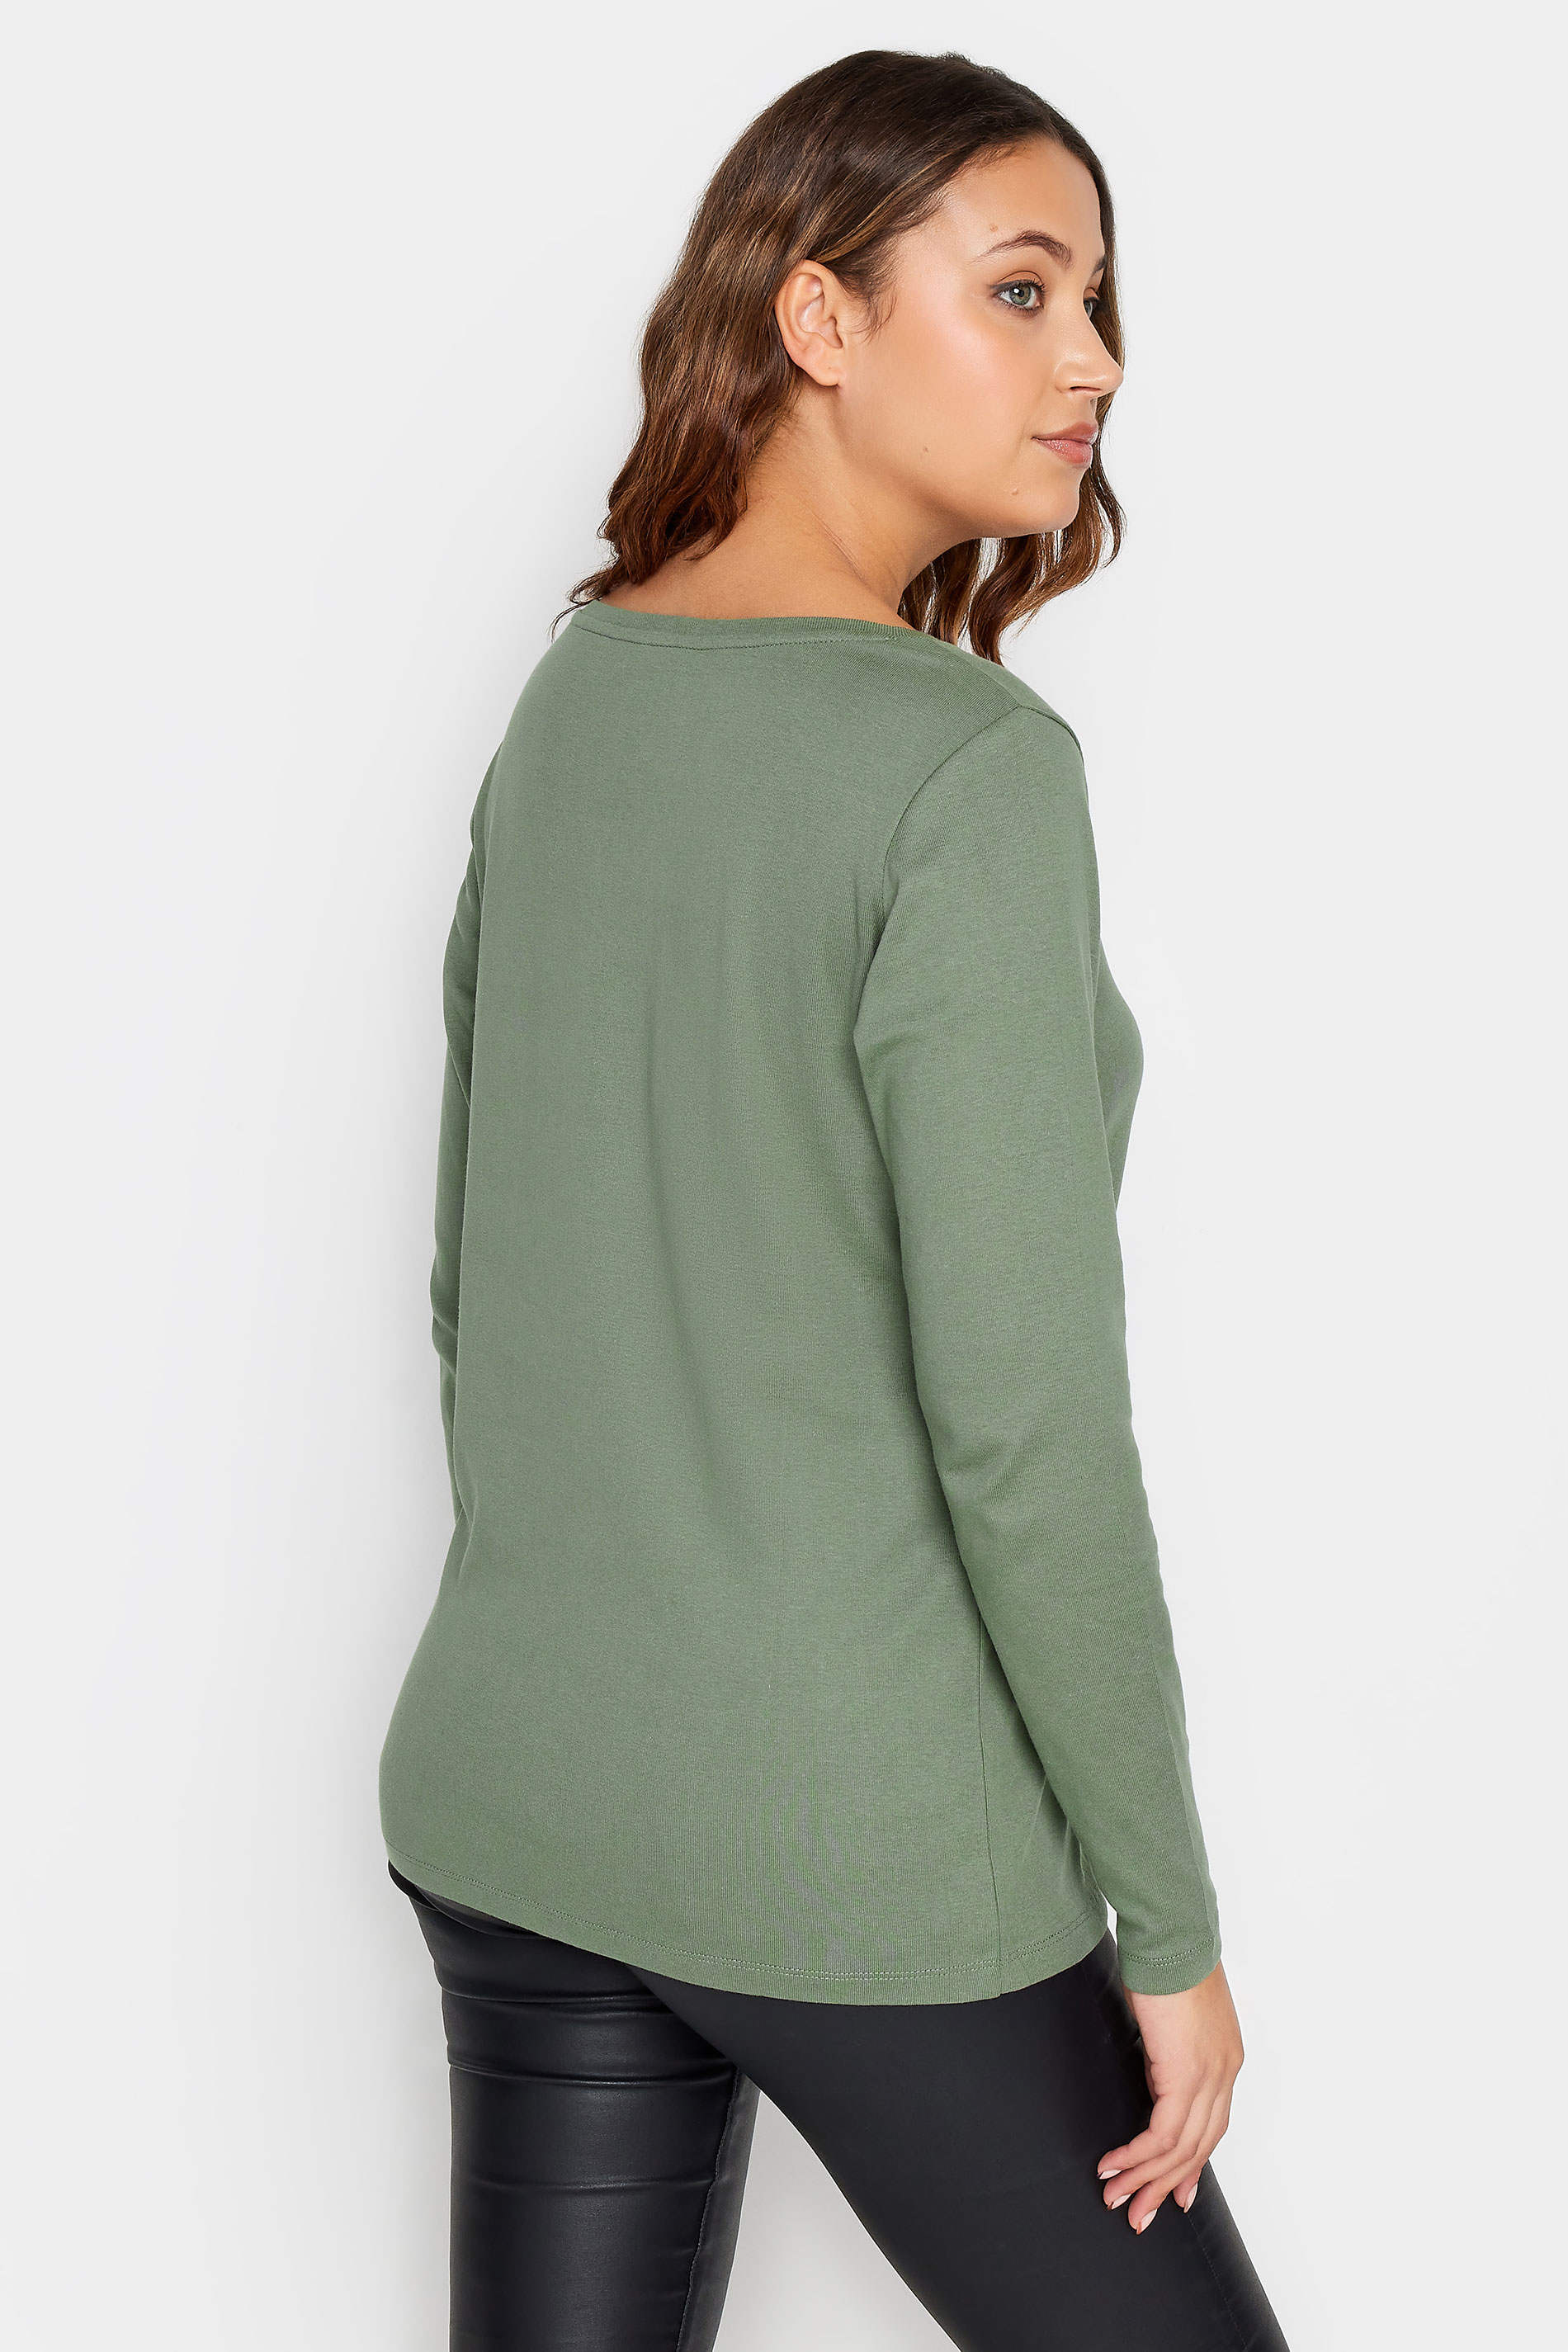 LTS Tall Khaki Green Long Sleeve Cotton T-Shirt | Long Tall Sally  3